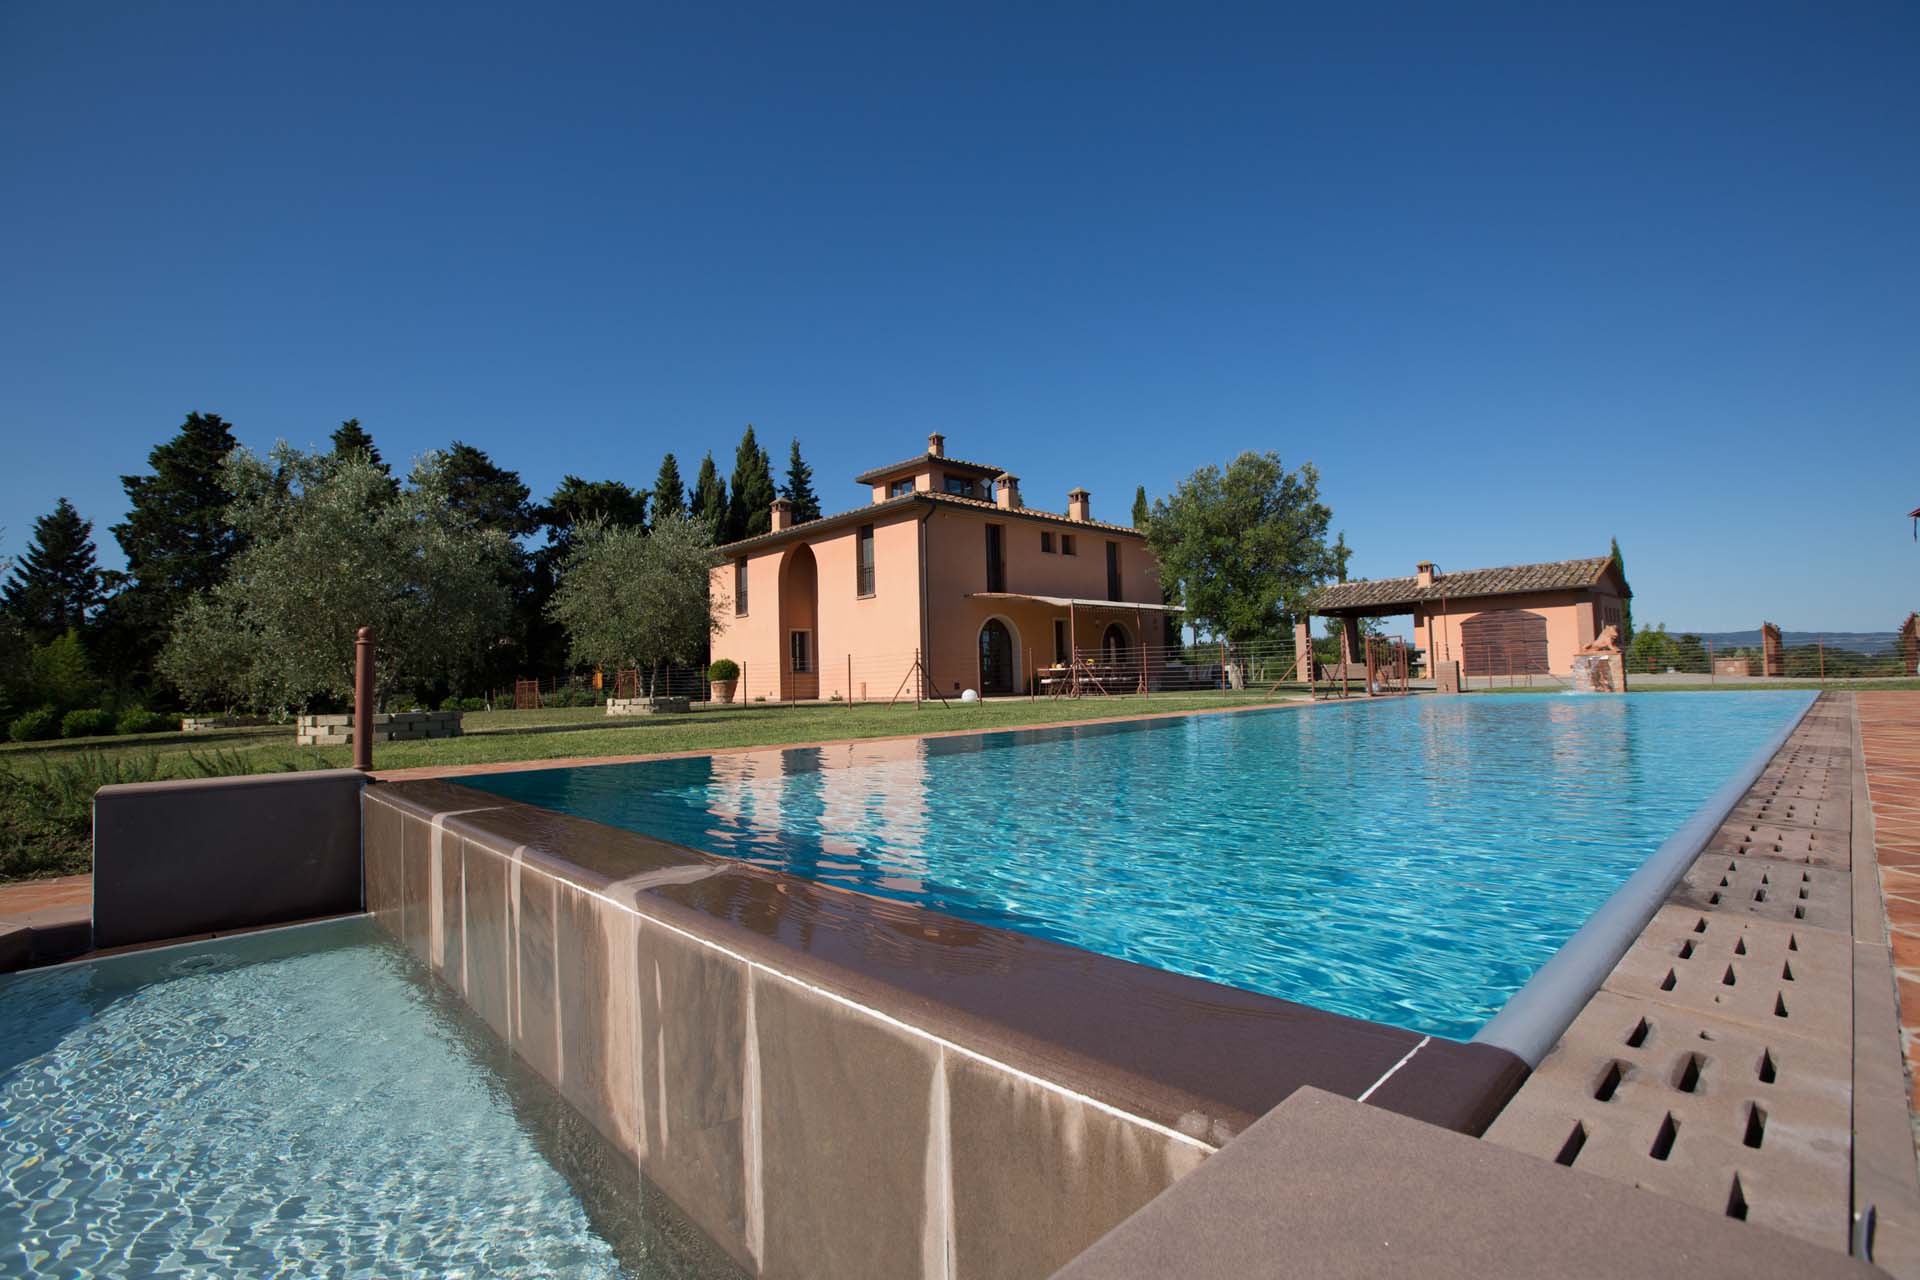 Luxury villa in hinterland of Tuscany